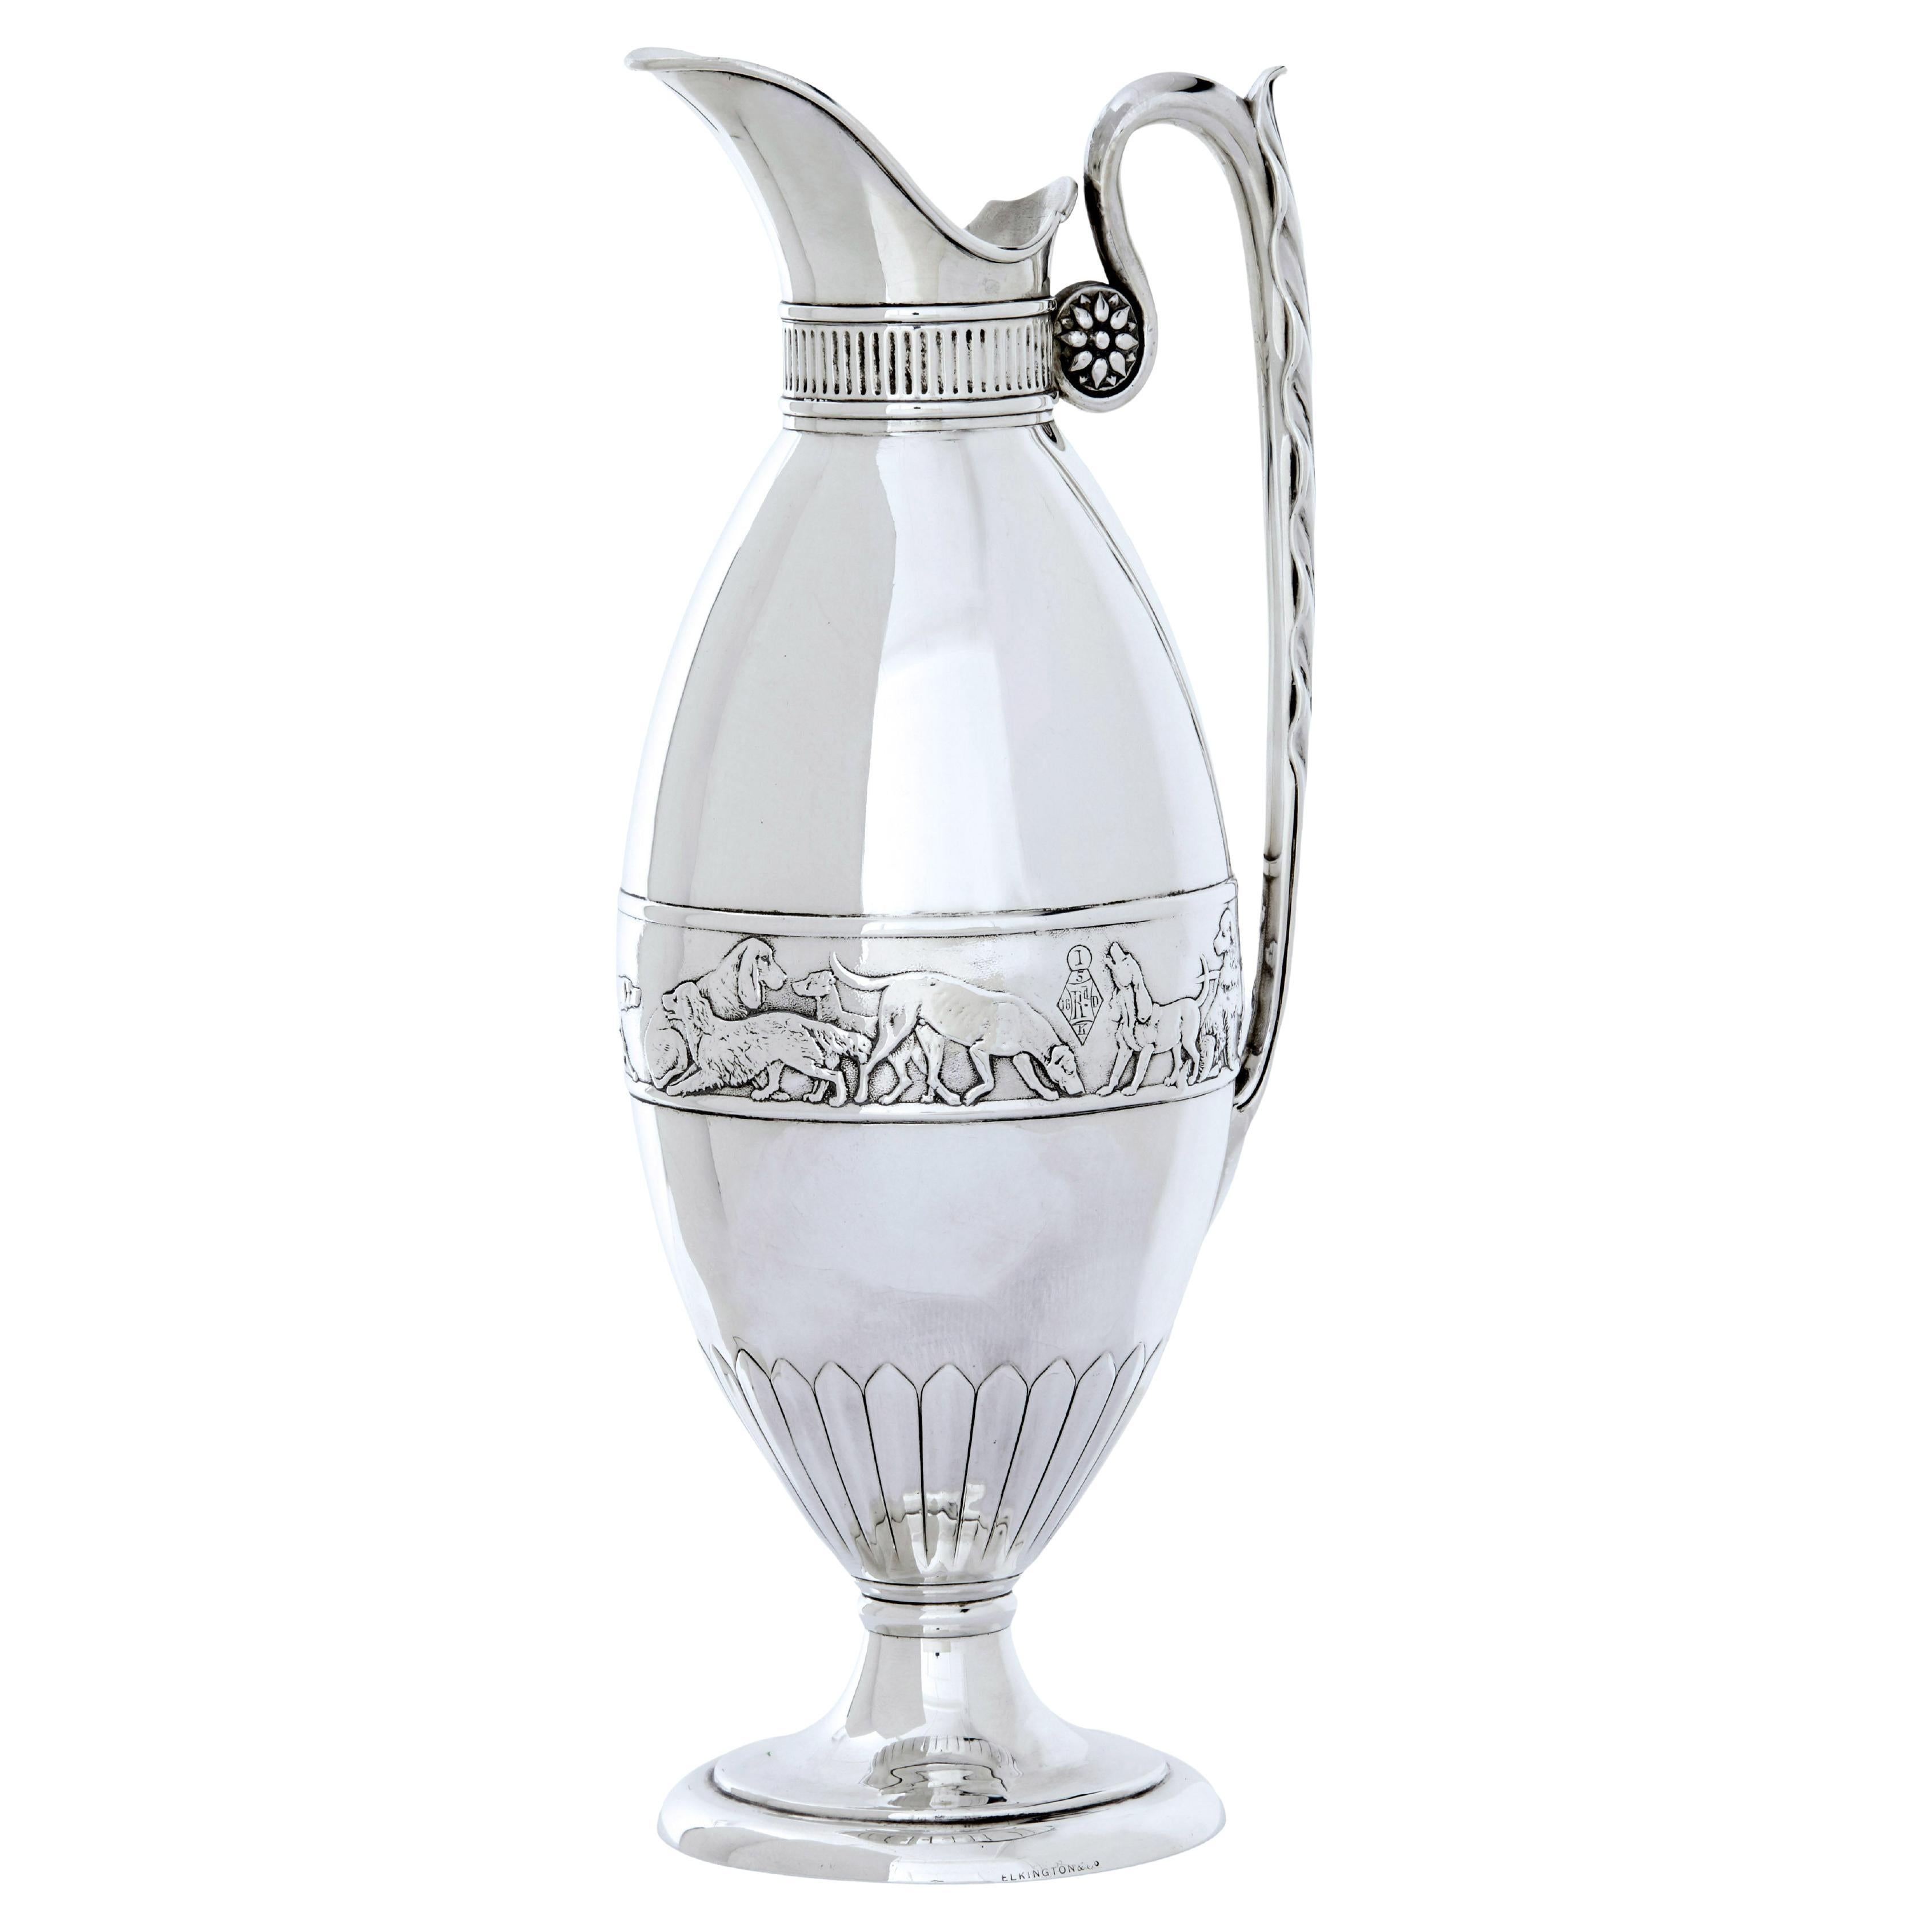 19th century silver claret jug by Frederick Elkington For Sale